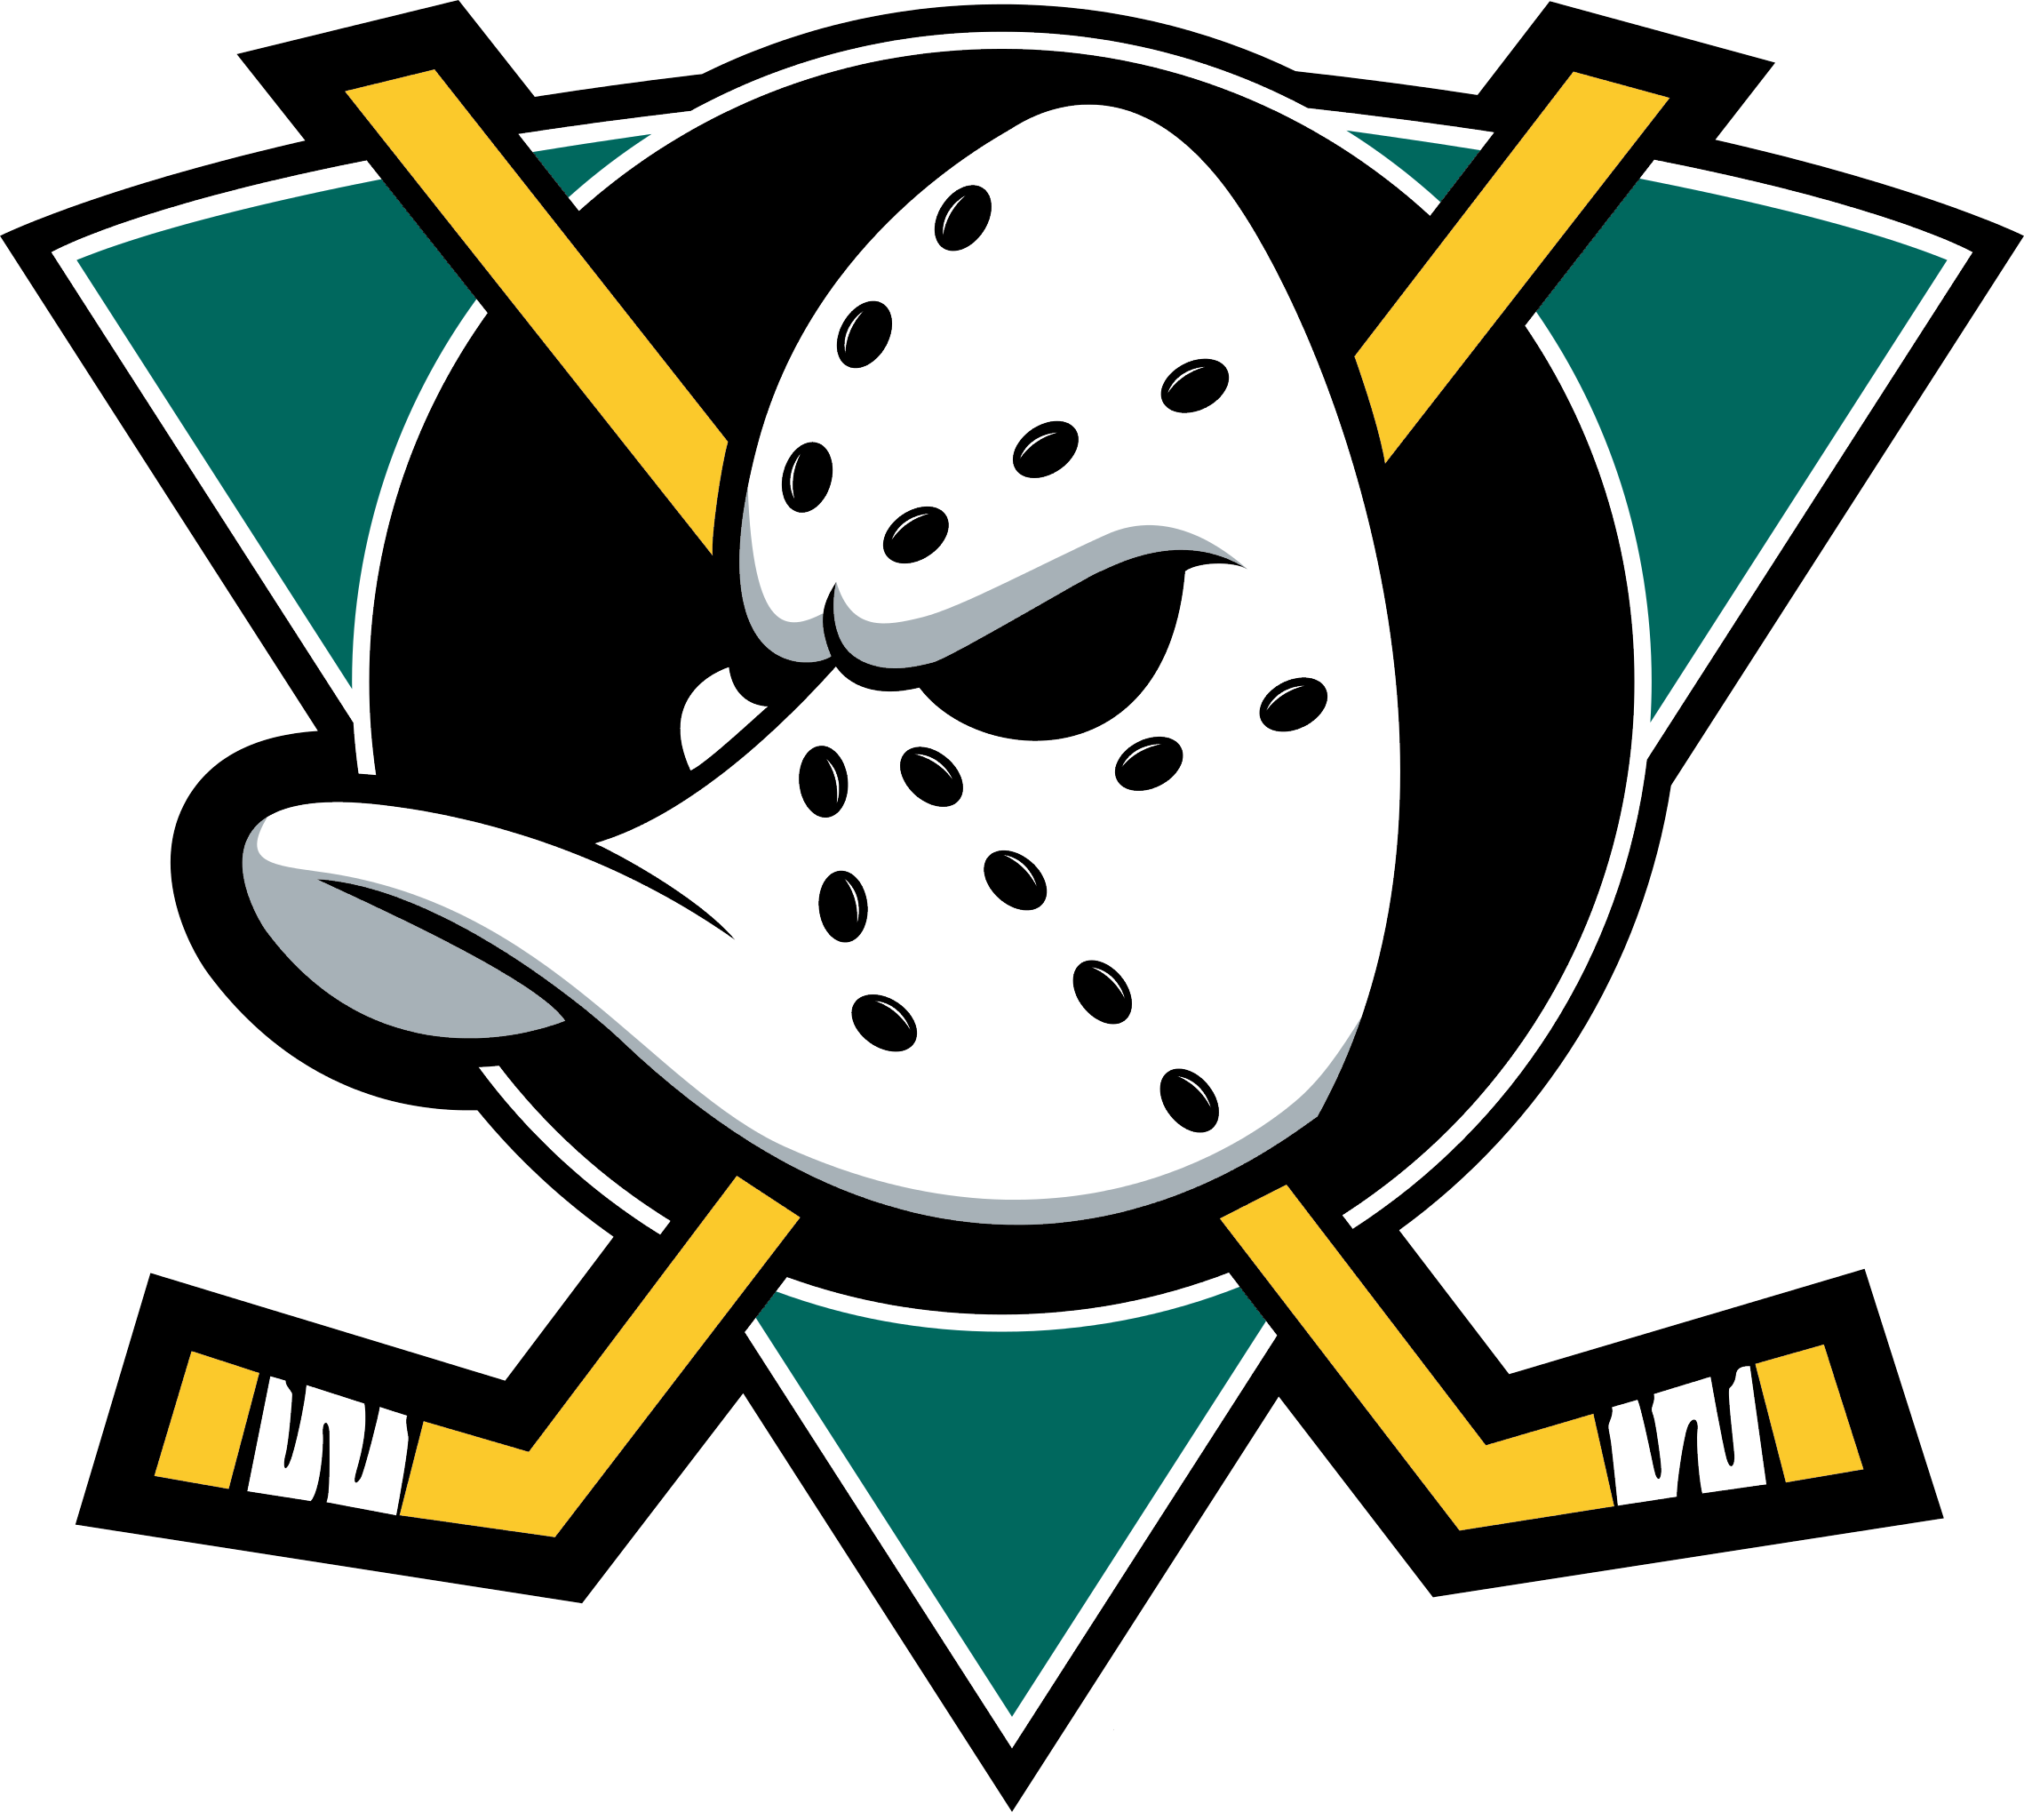 D3: The Mighty Ducks - Wikipedia